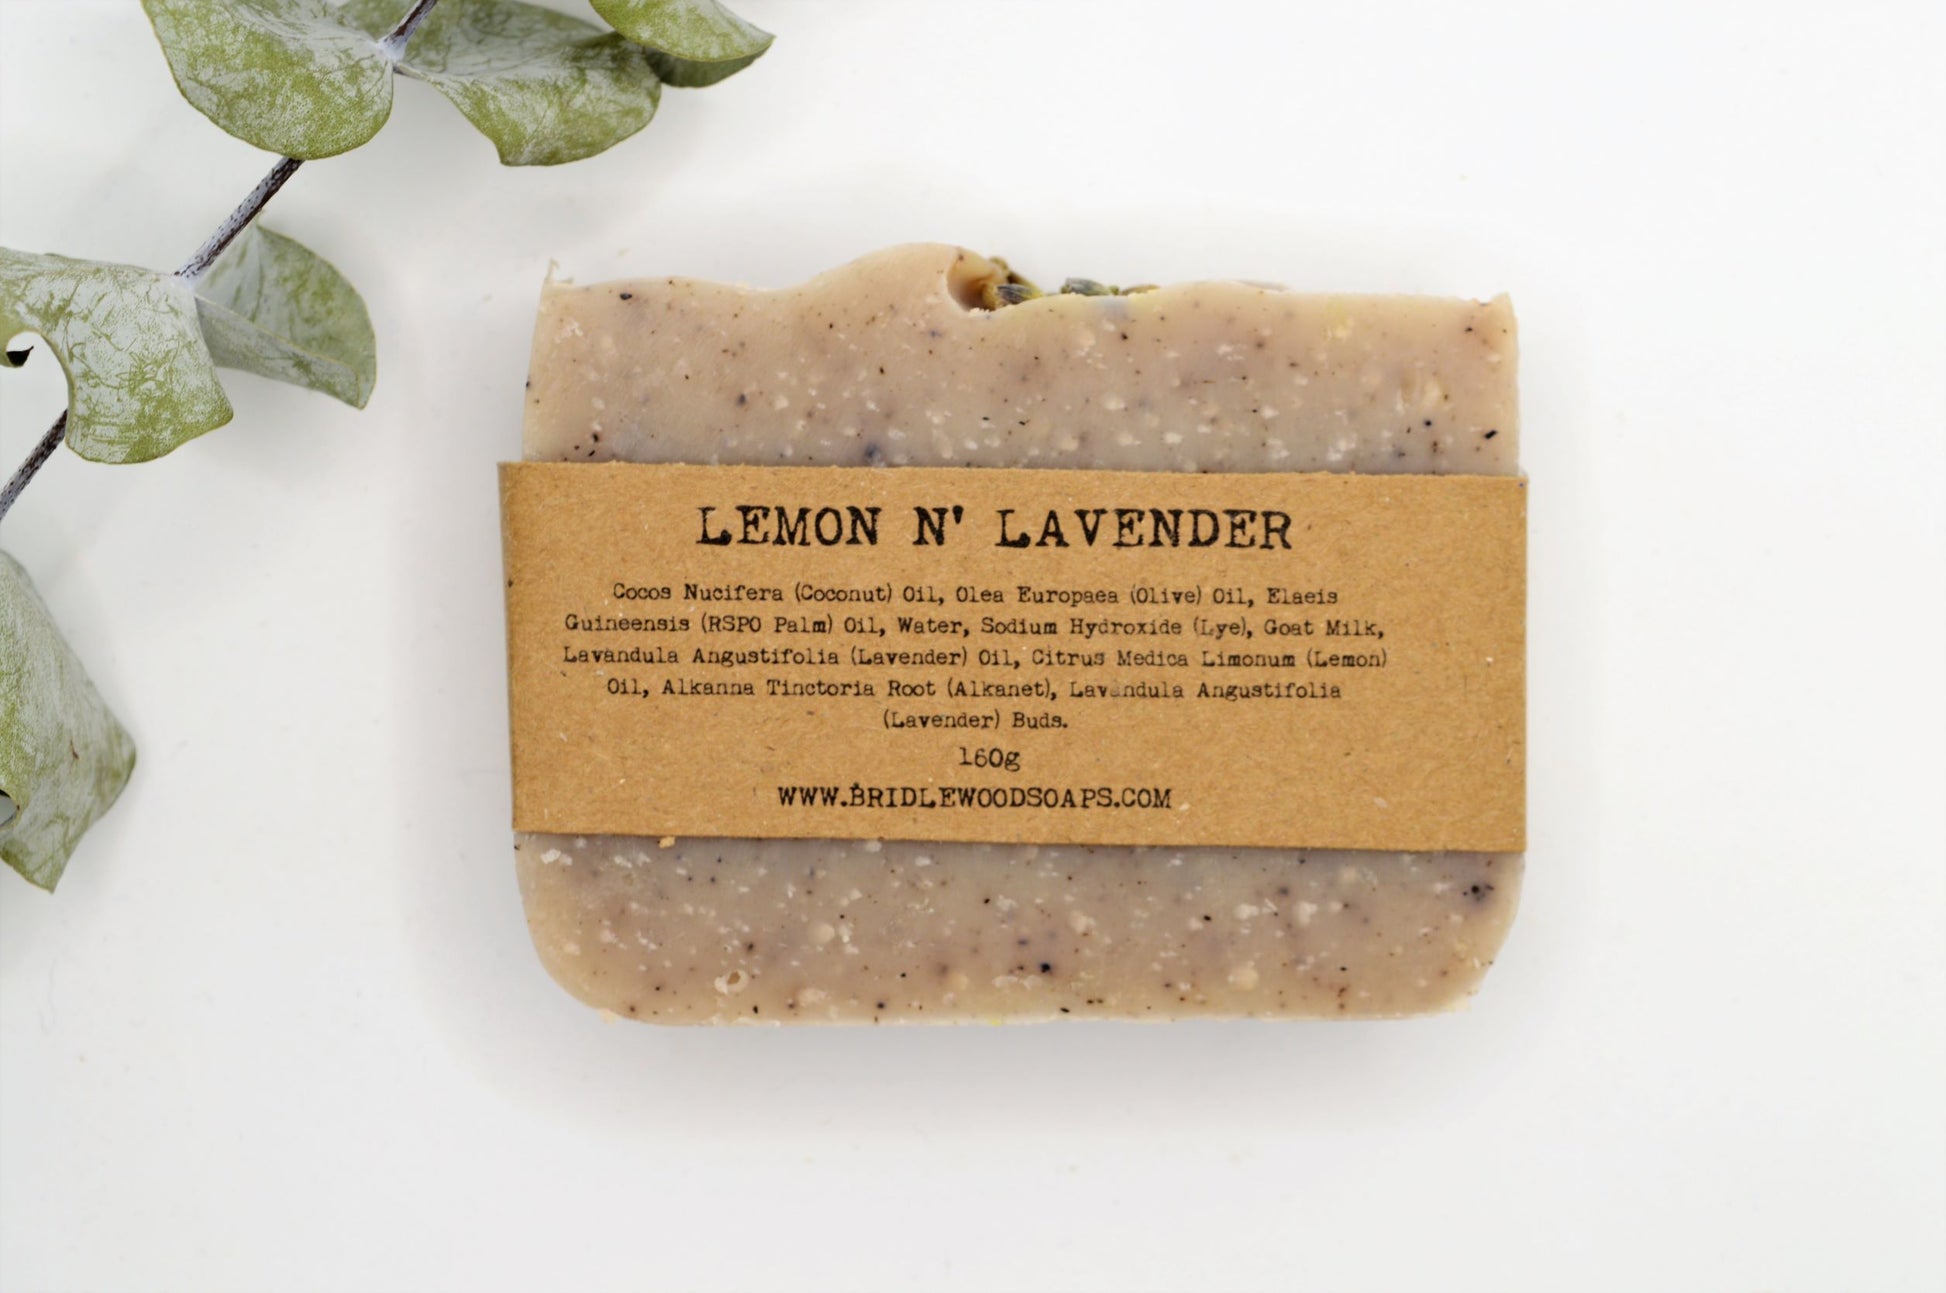 Lemon Lavender Soap Bridlewood Soaps